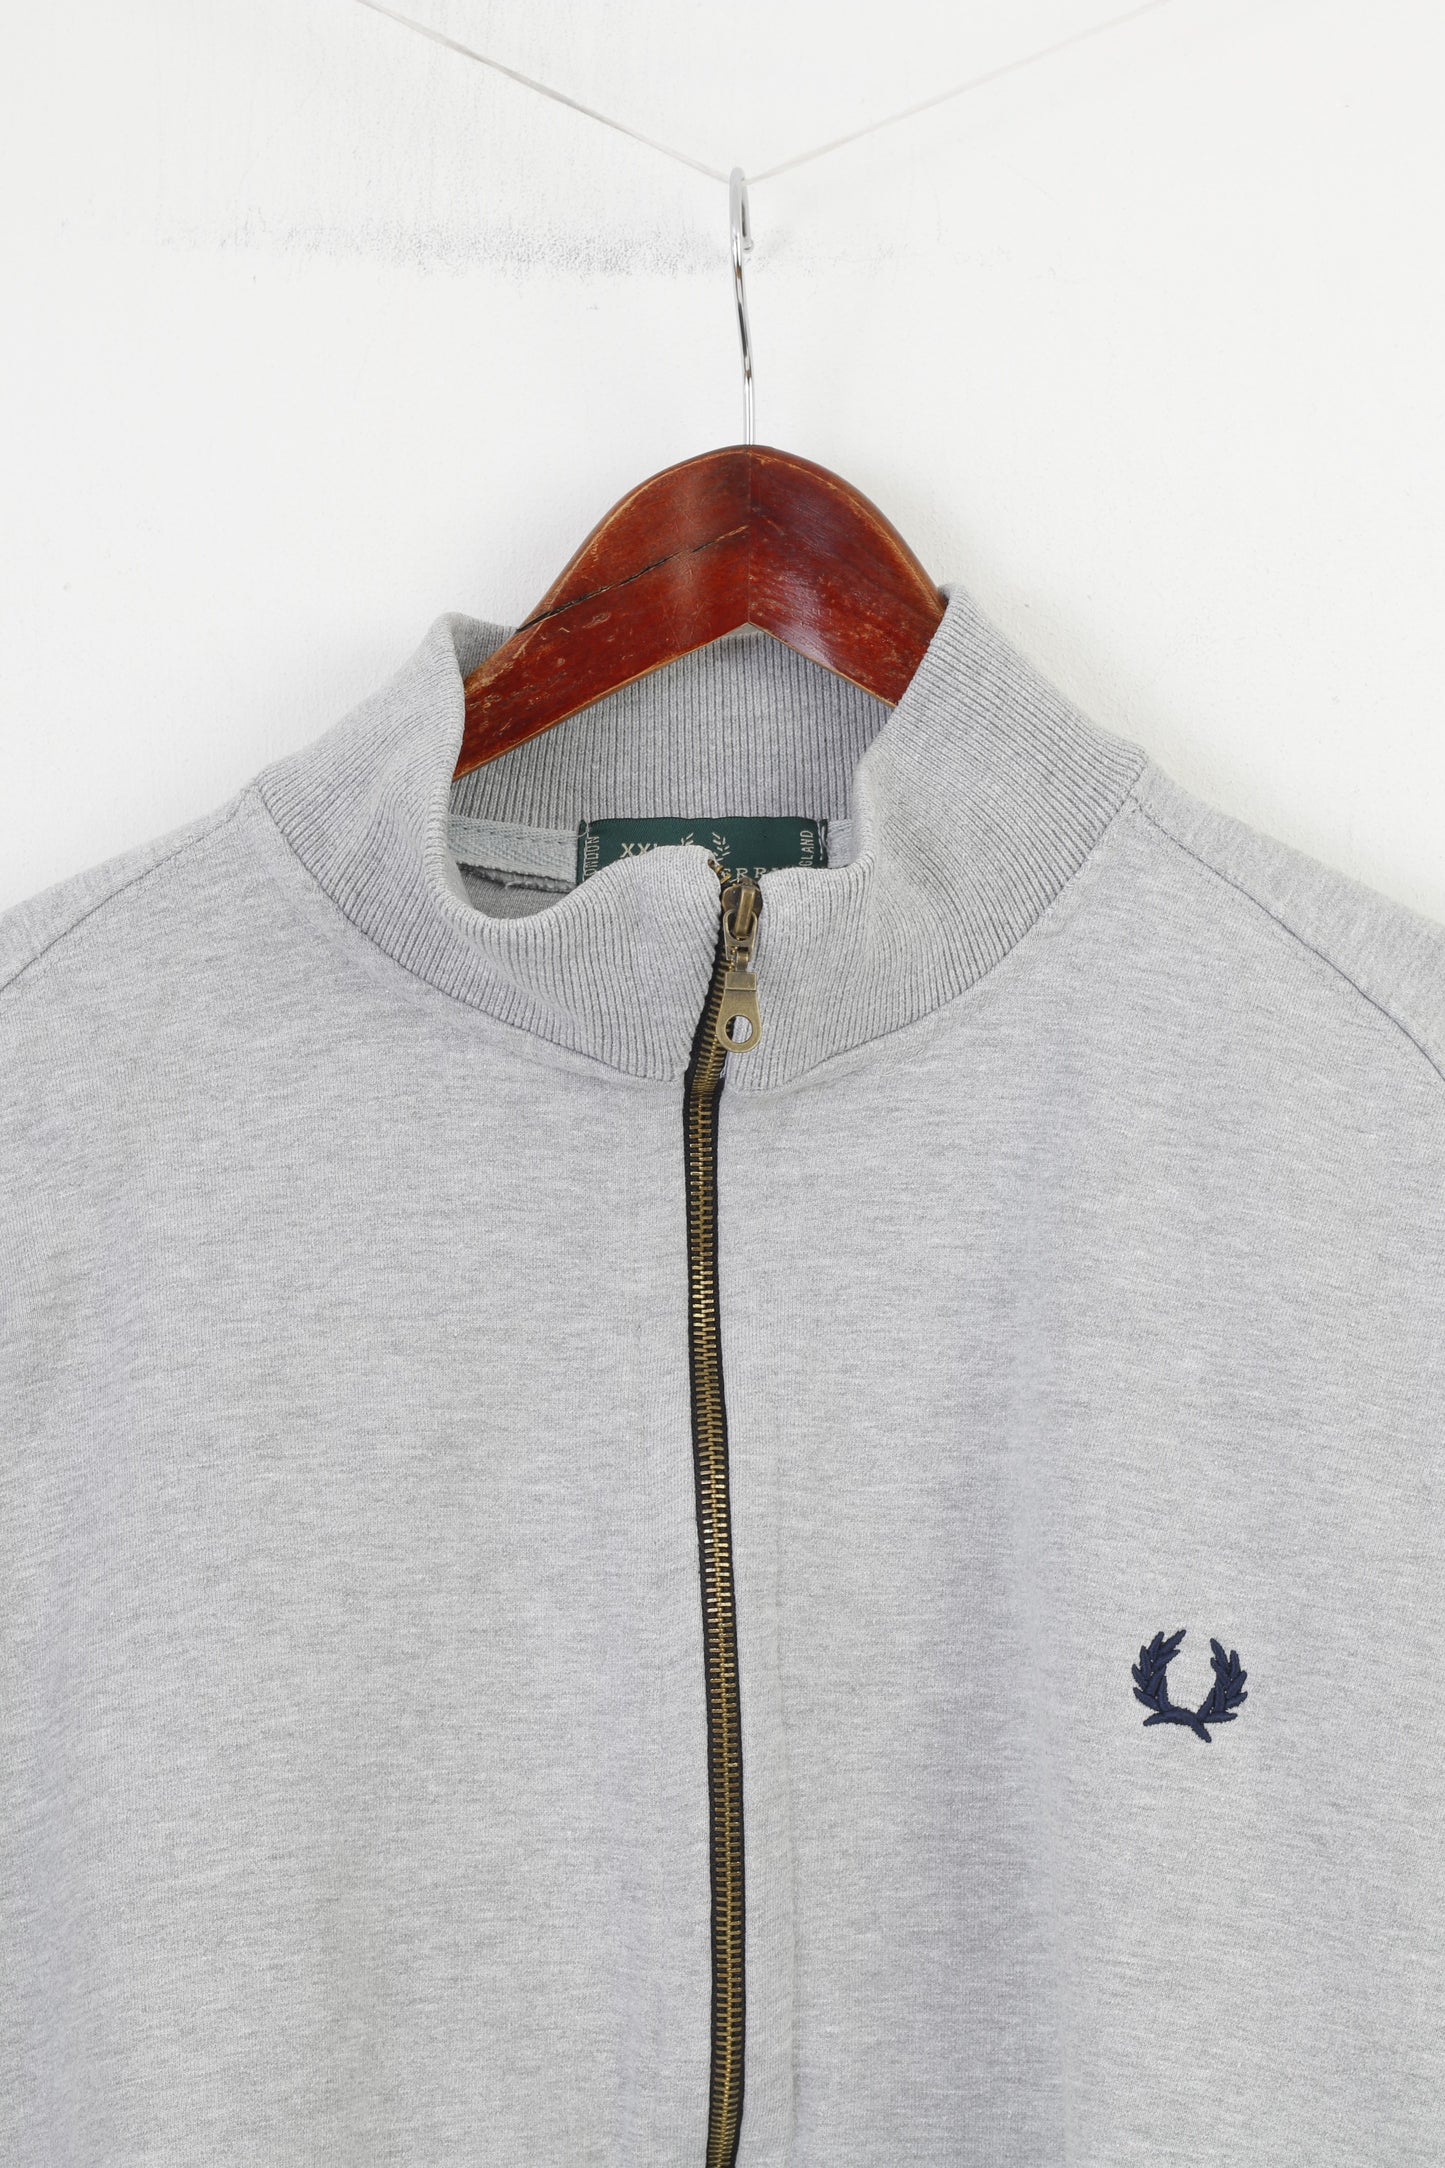 Fred Perry Men XXL Sweatshirt England Grey Cotton Full Zippper Collar Long Sleeve Sport Top